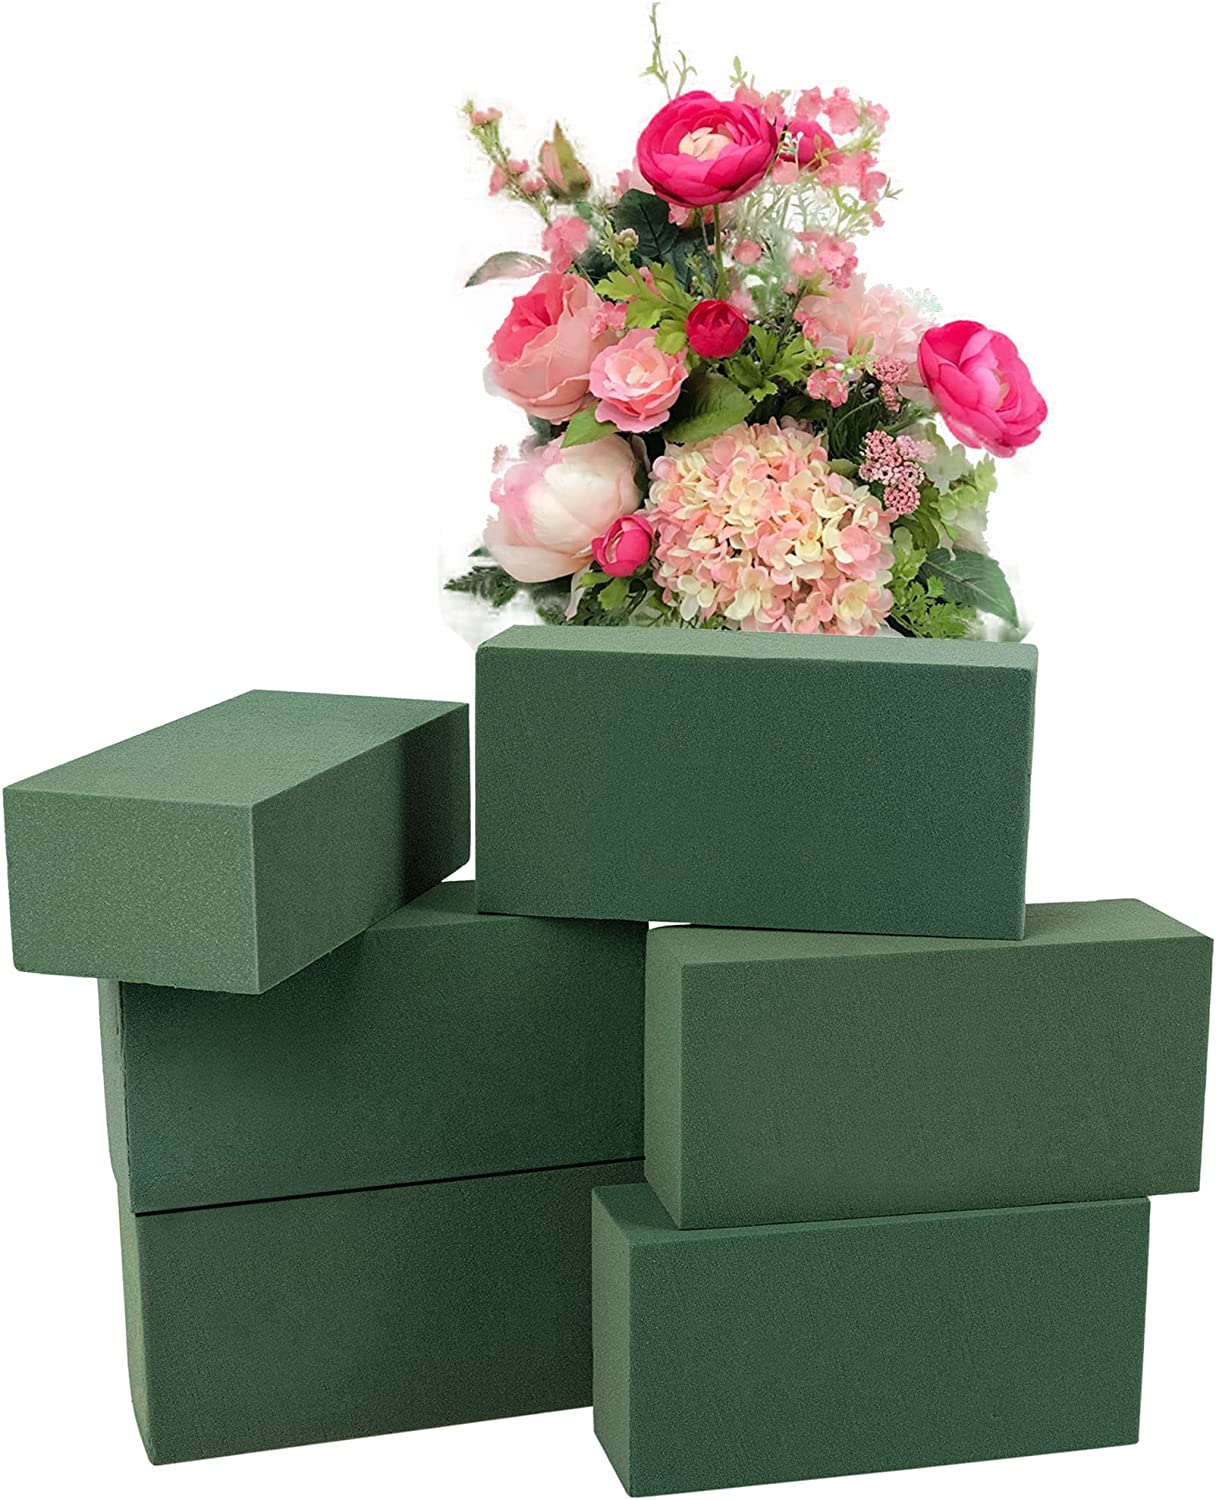 Nogis 6pc Wet Floral Foam Blocks Green Florist Bricks for Fresh and Artificial Foam for Flower Arrangements, Craft Styrofoam Supplies, Size: 9 x 4.3